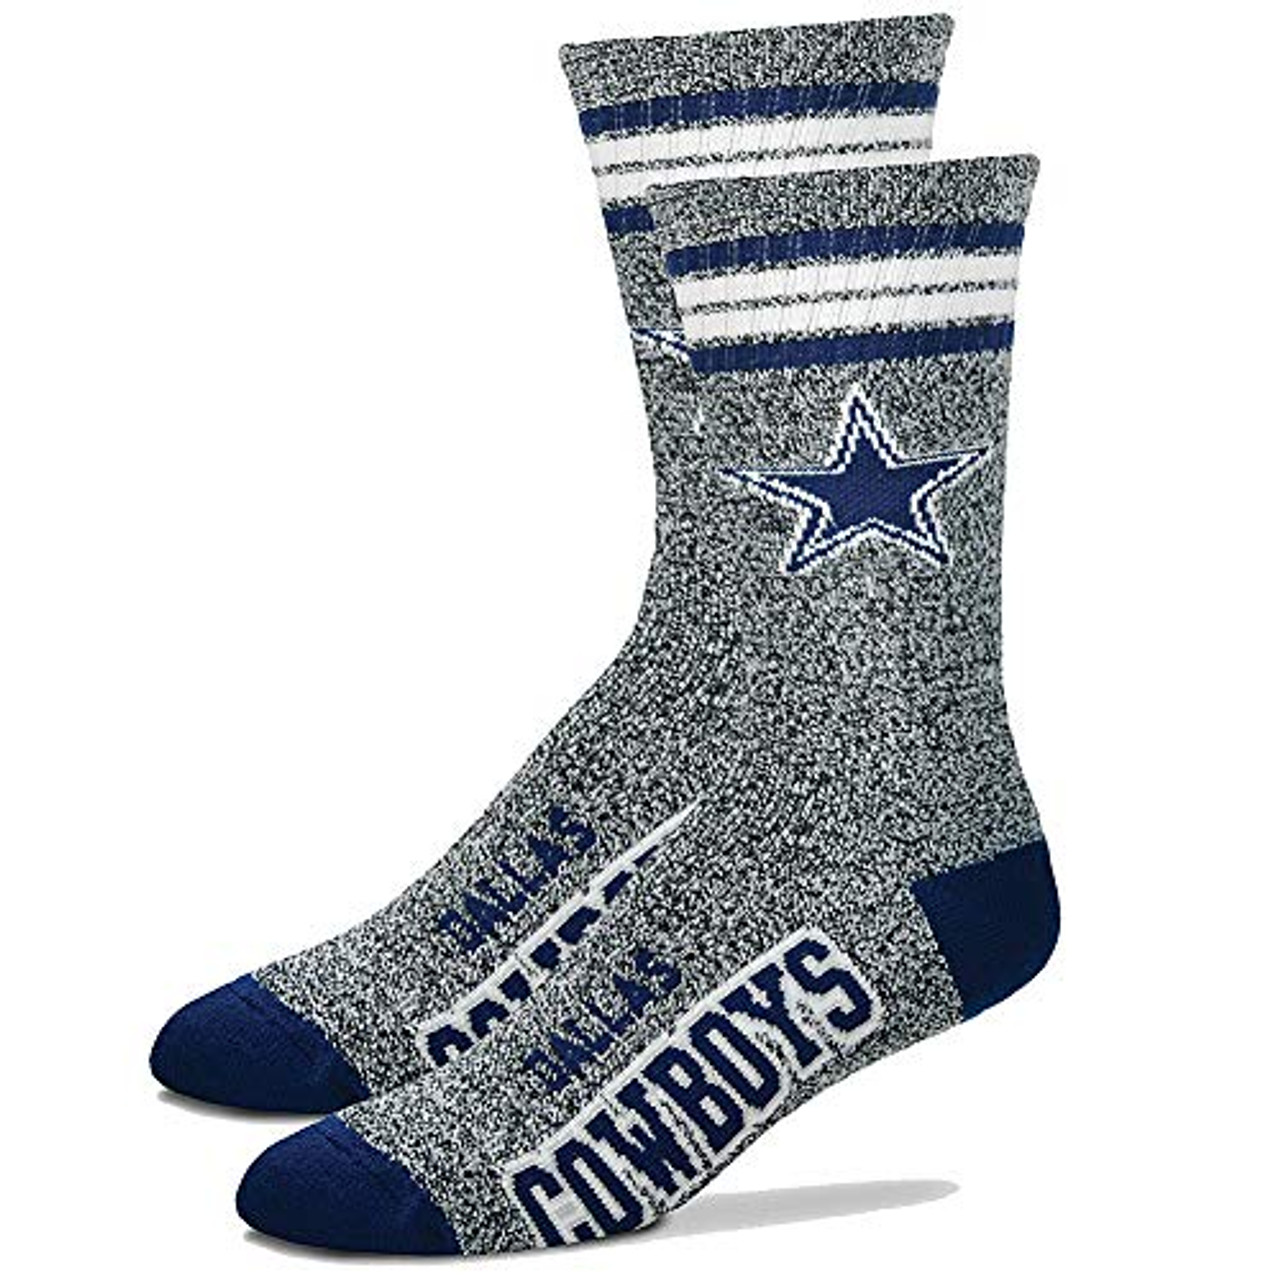 Socks Dallas Cowboys Got Marbled Large 